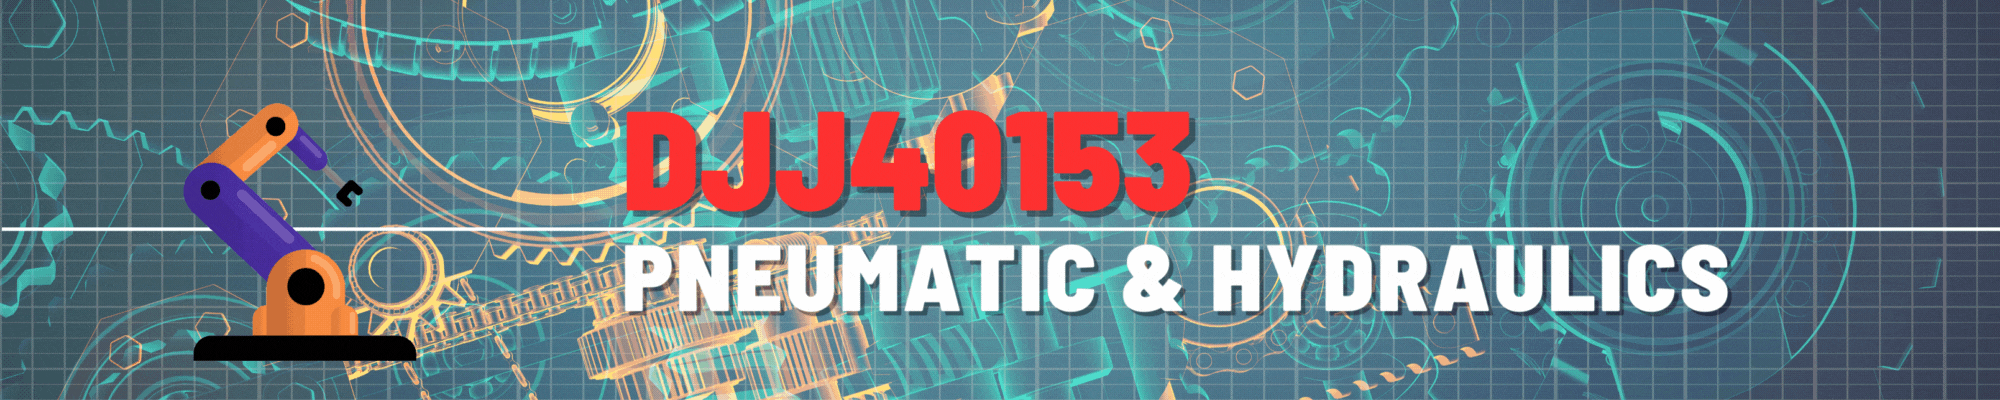 DJJ40153 PNEUMATIC &amp; HYDRAULICS